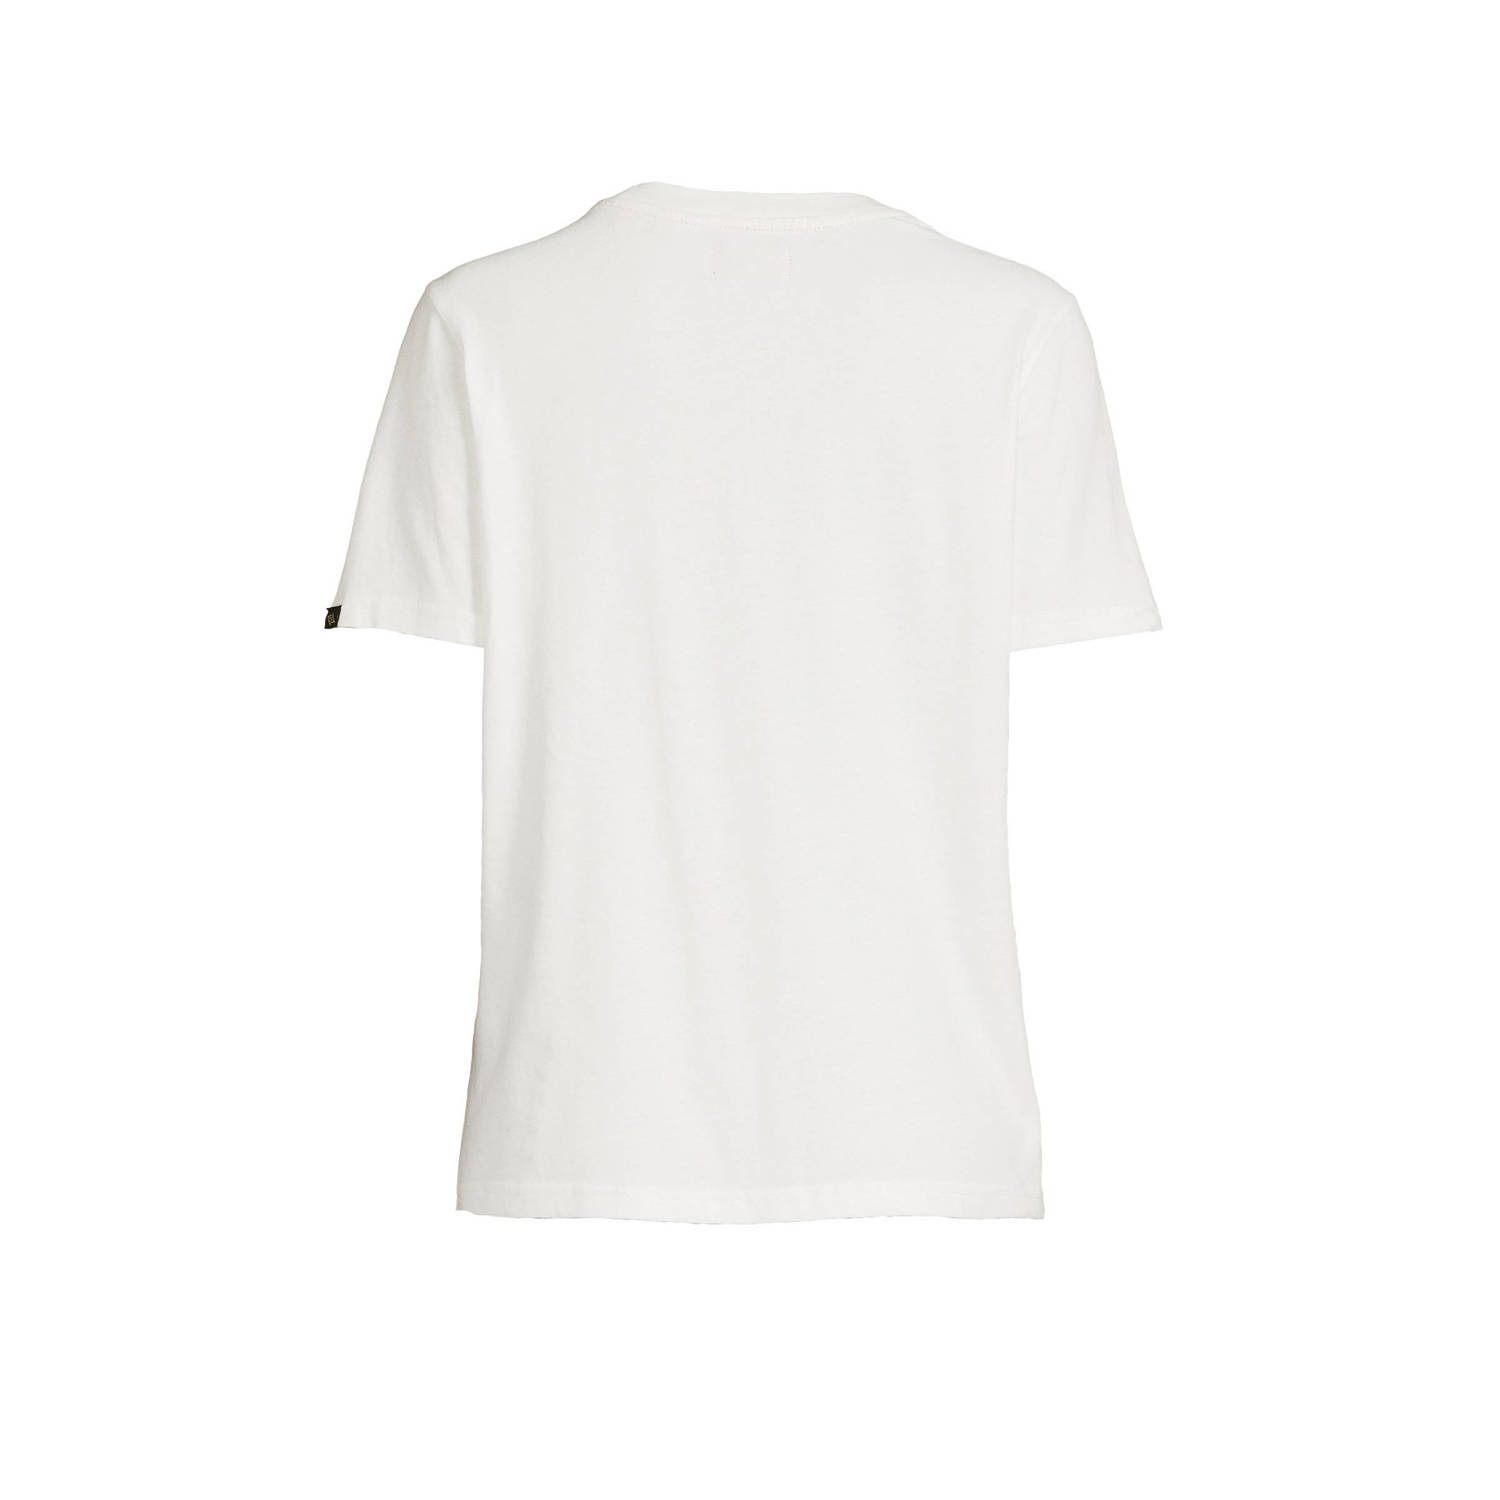 Superdry T-shirt 70'S RETRO ROCK met printopdruk wit